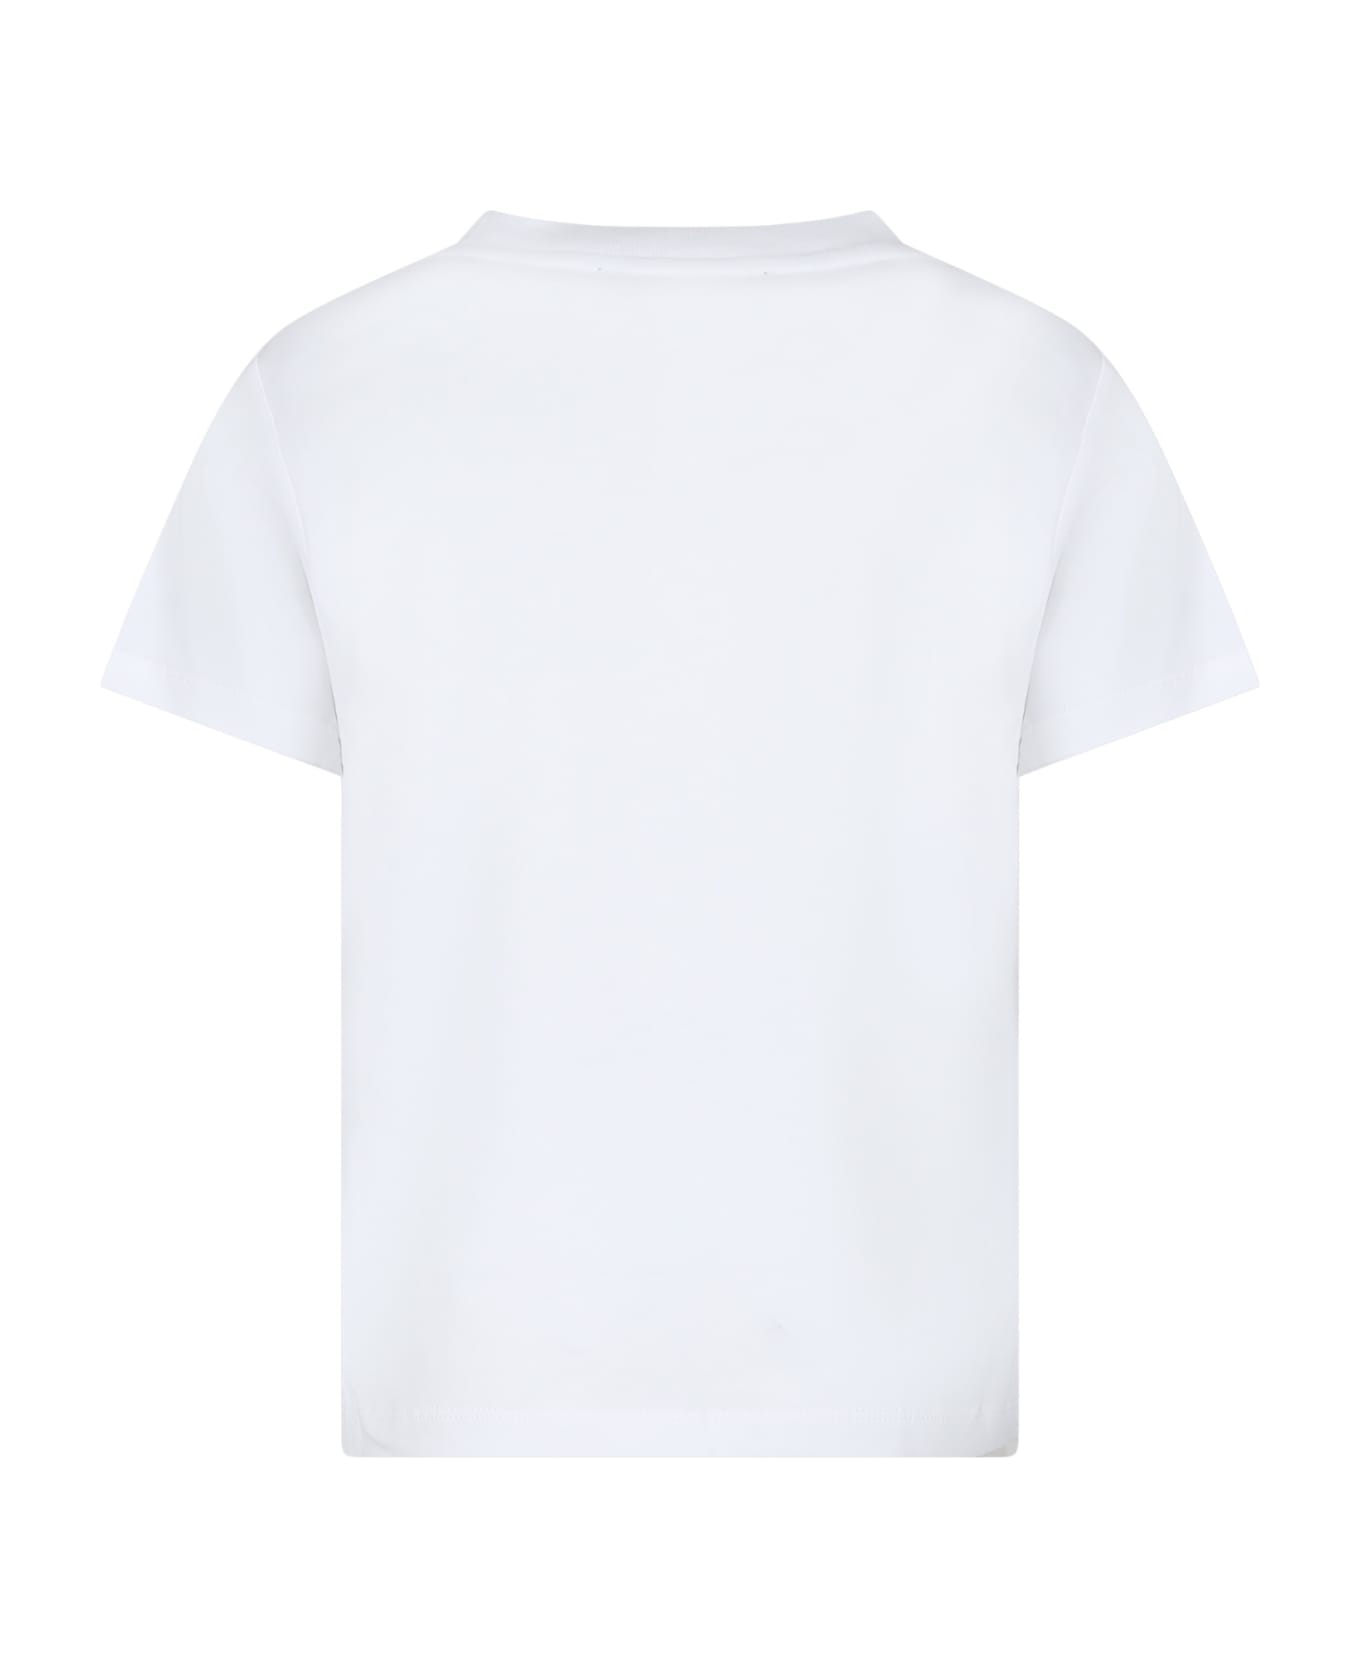 Balmain White T-shirt For Kids With Green Logo - White